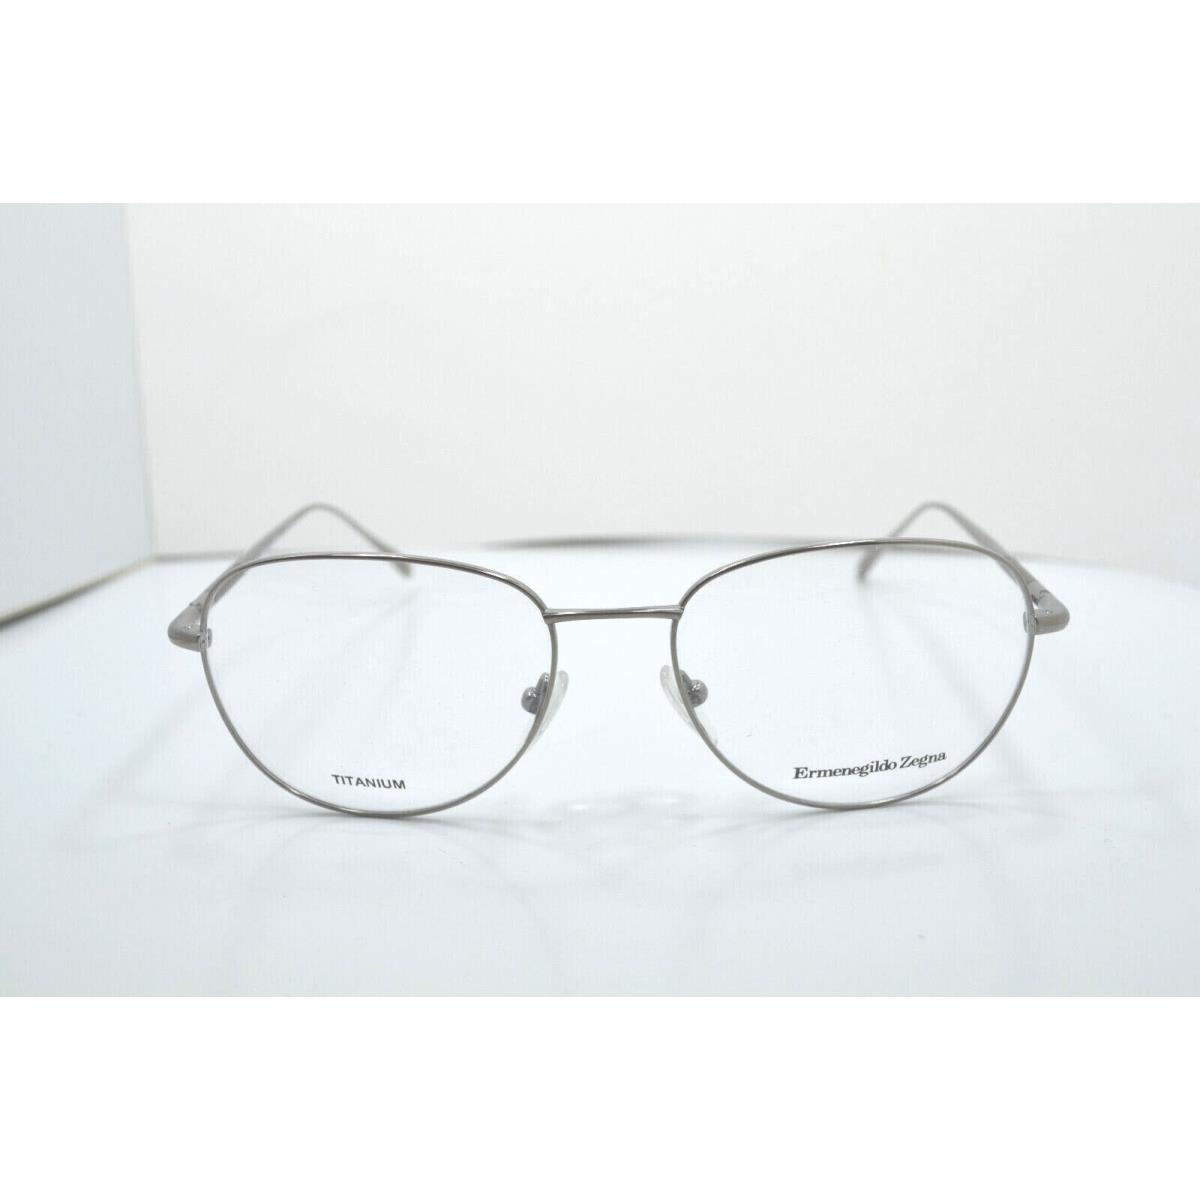 Ermenegildo Zegna eyeglasses  - Silver Frame 0